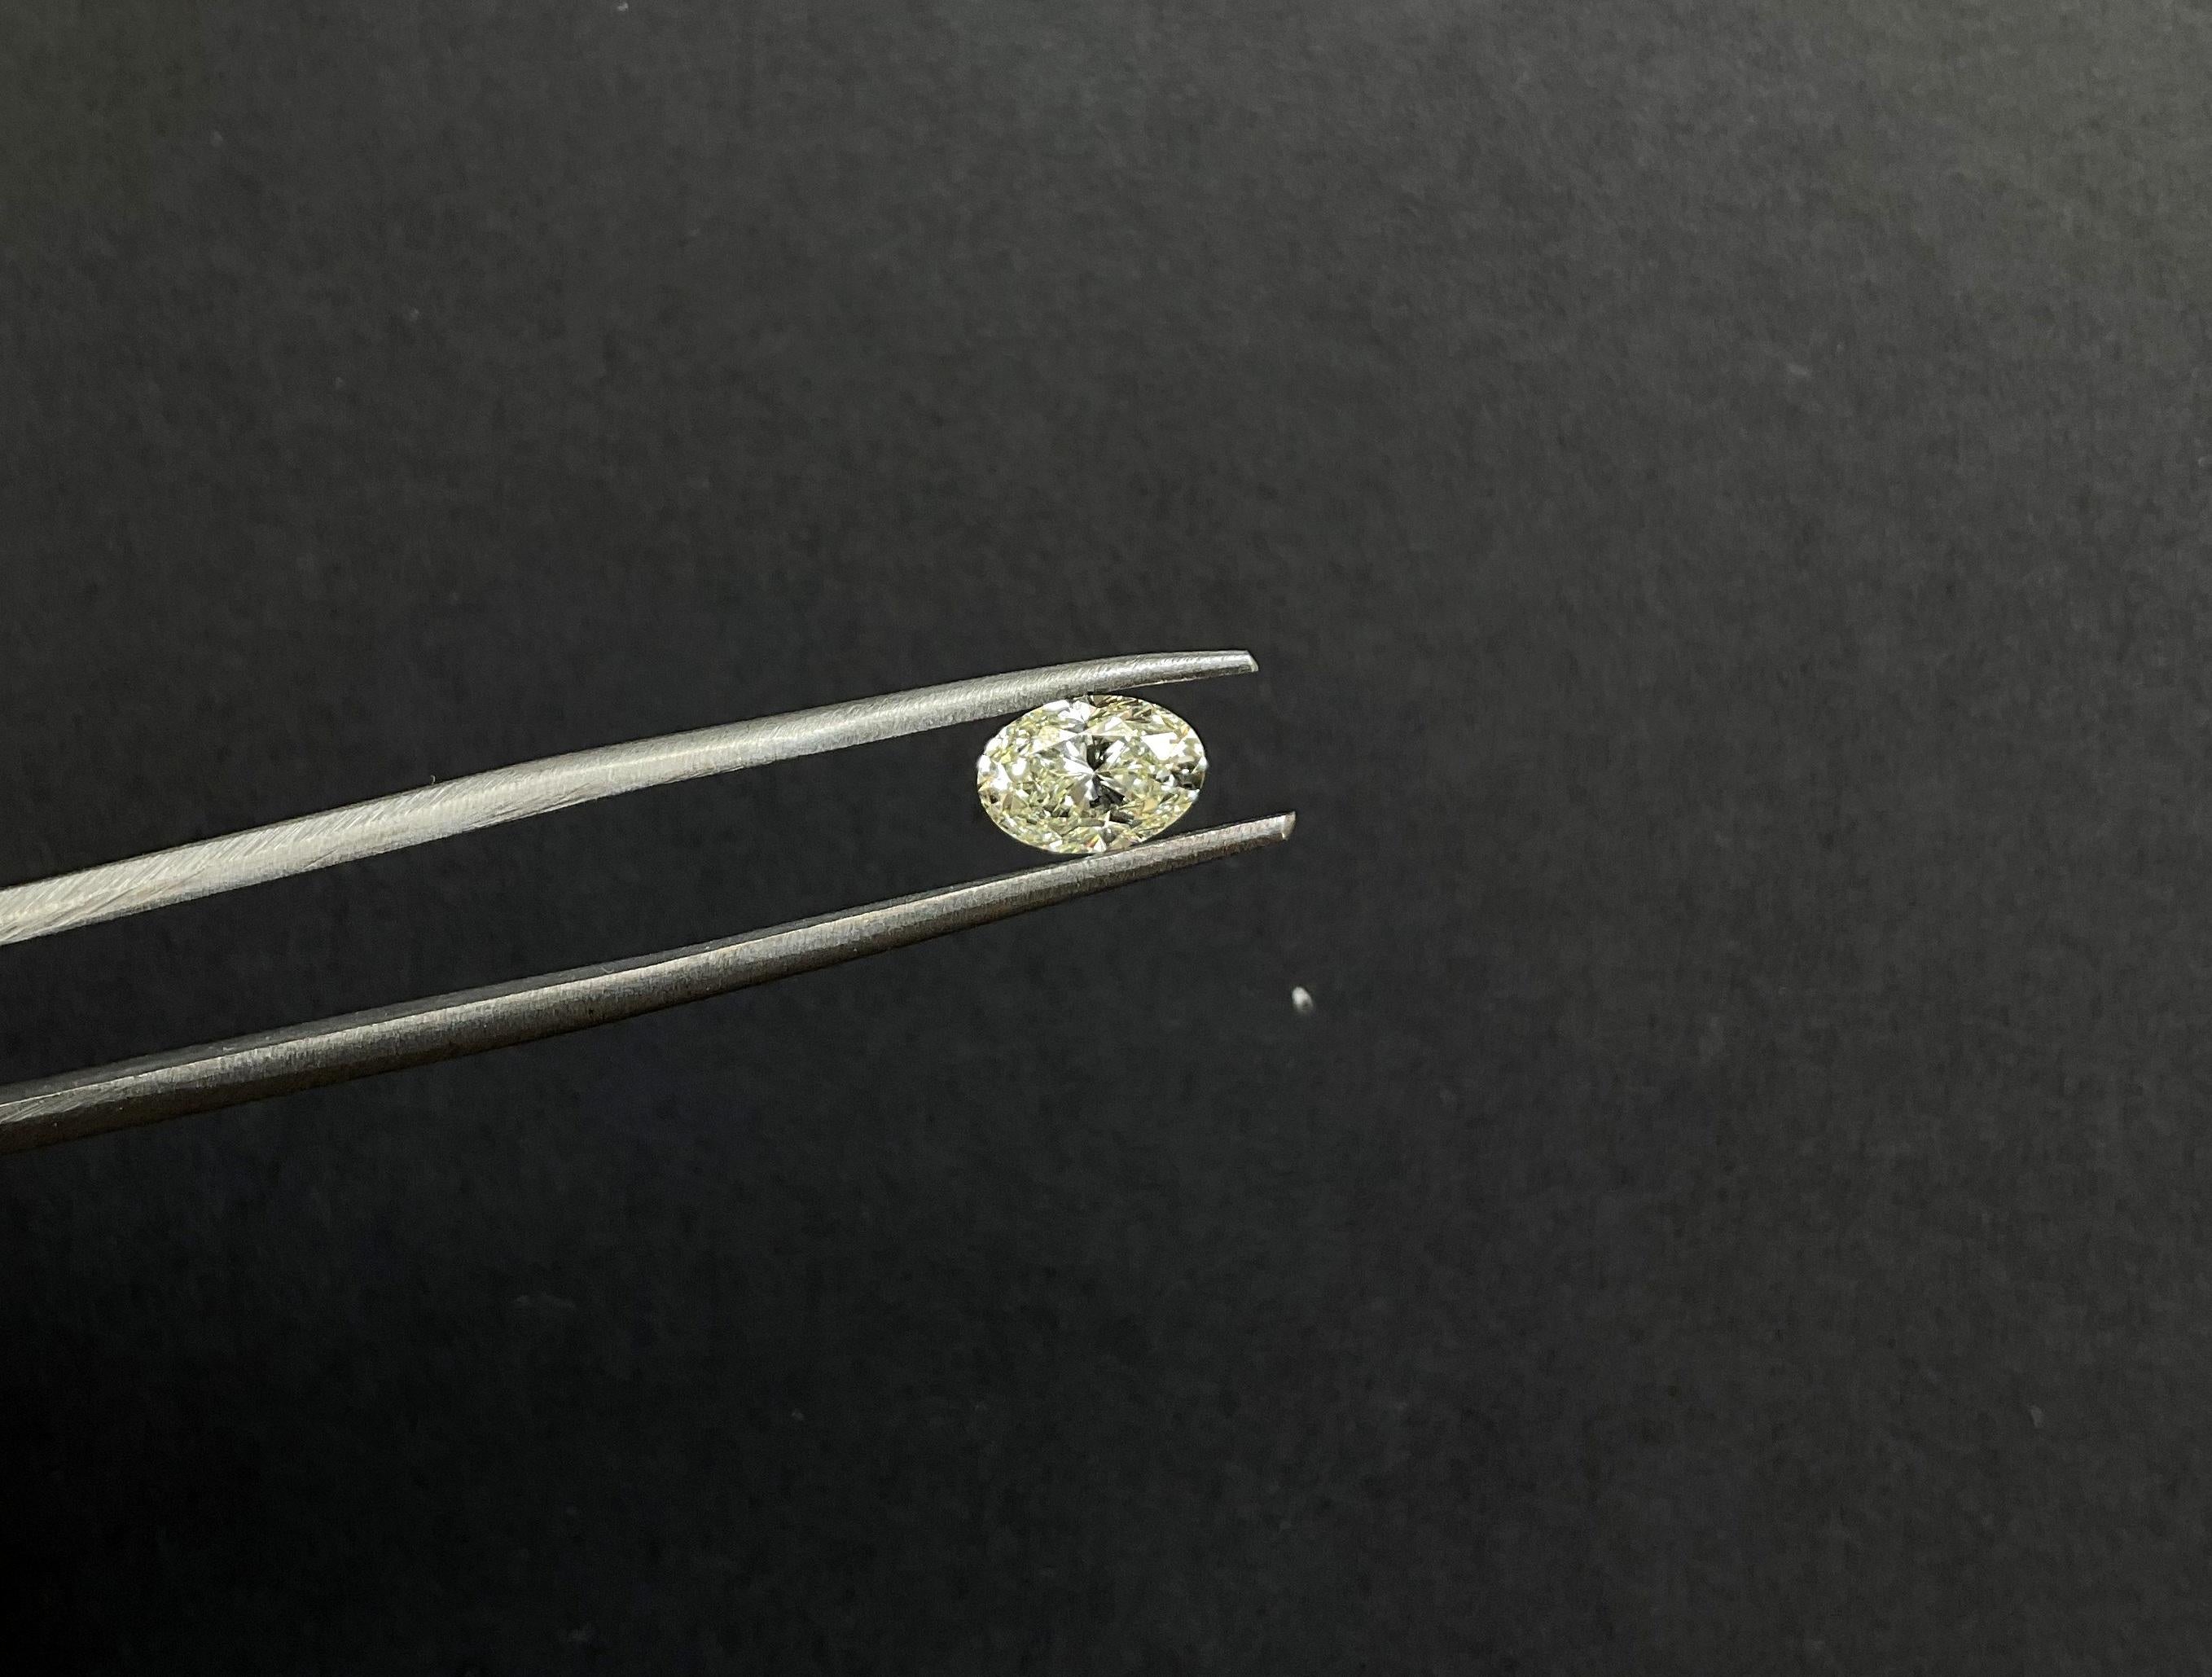 1.00 Carat Non-Certified Diamond Oval Brilliant Cut L Color For Top Fine Jewelry

Weight : 1.00 Carats
Color : L
Clarity : SI
Quantity : 1  
Cut : Oval Brilliant 
Size : 7x5 MM